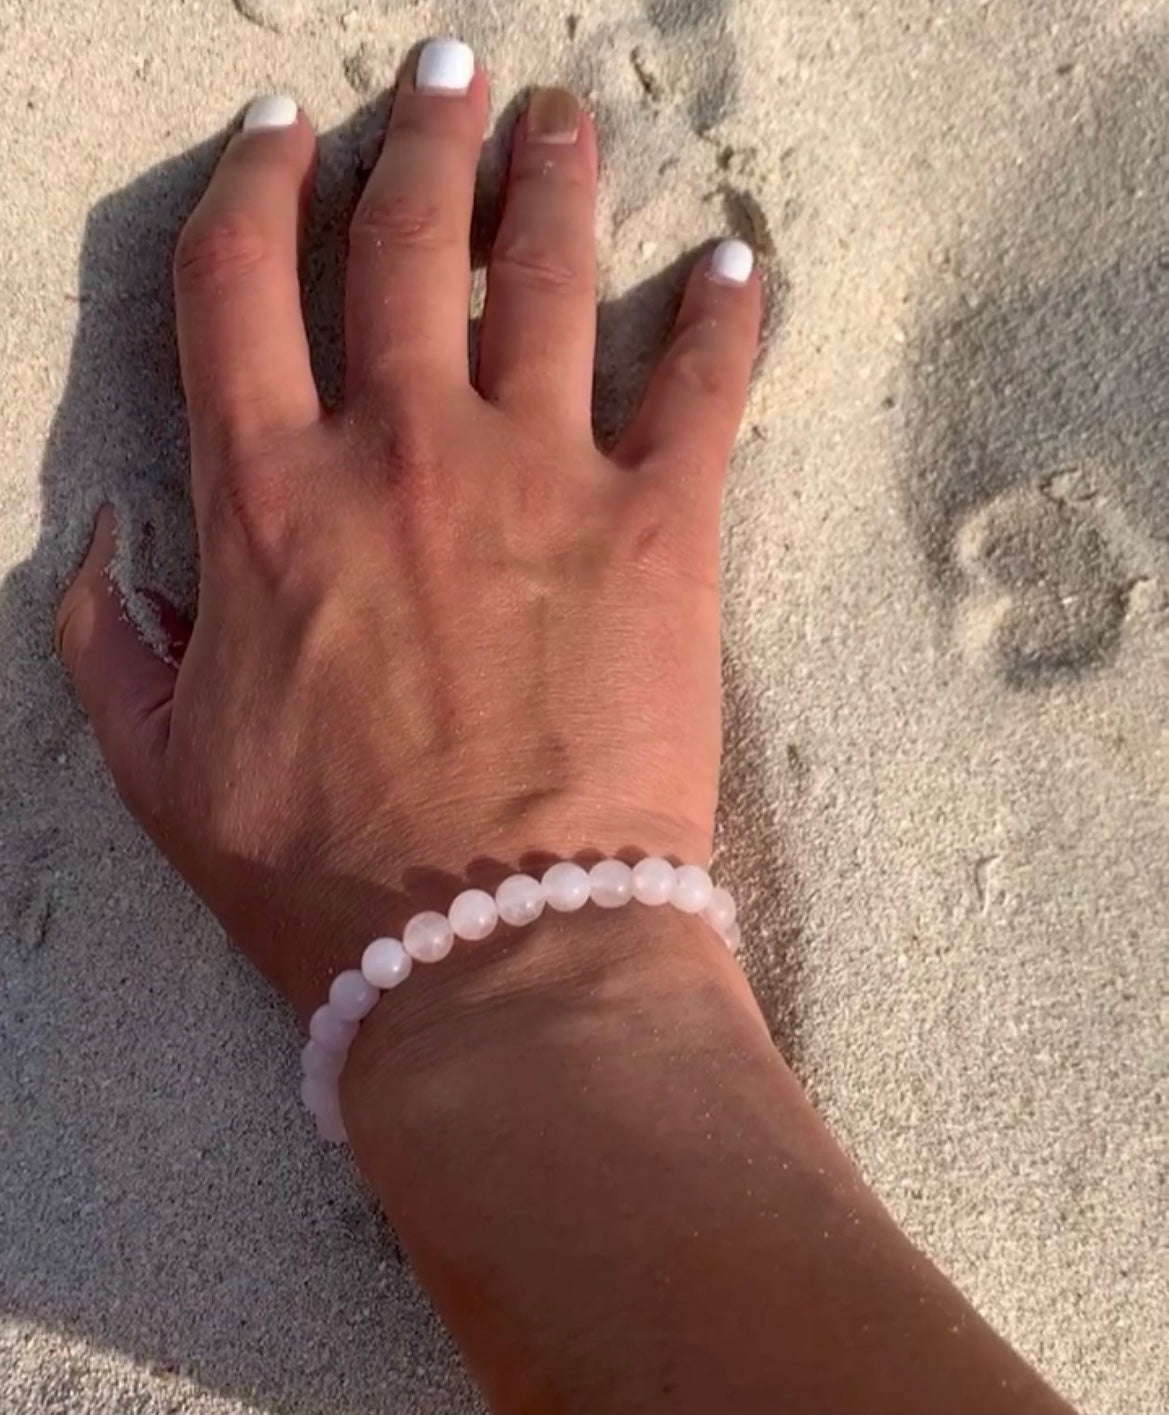 Healing Crystal Bracelet